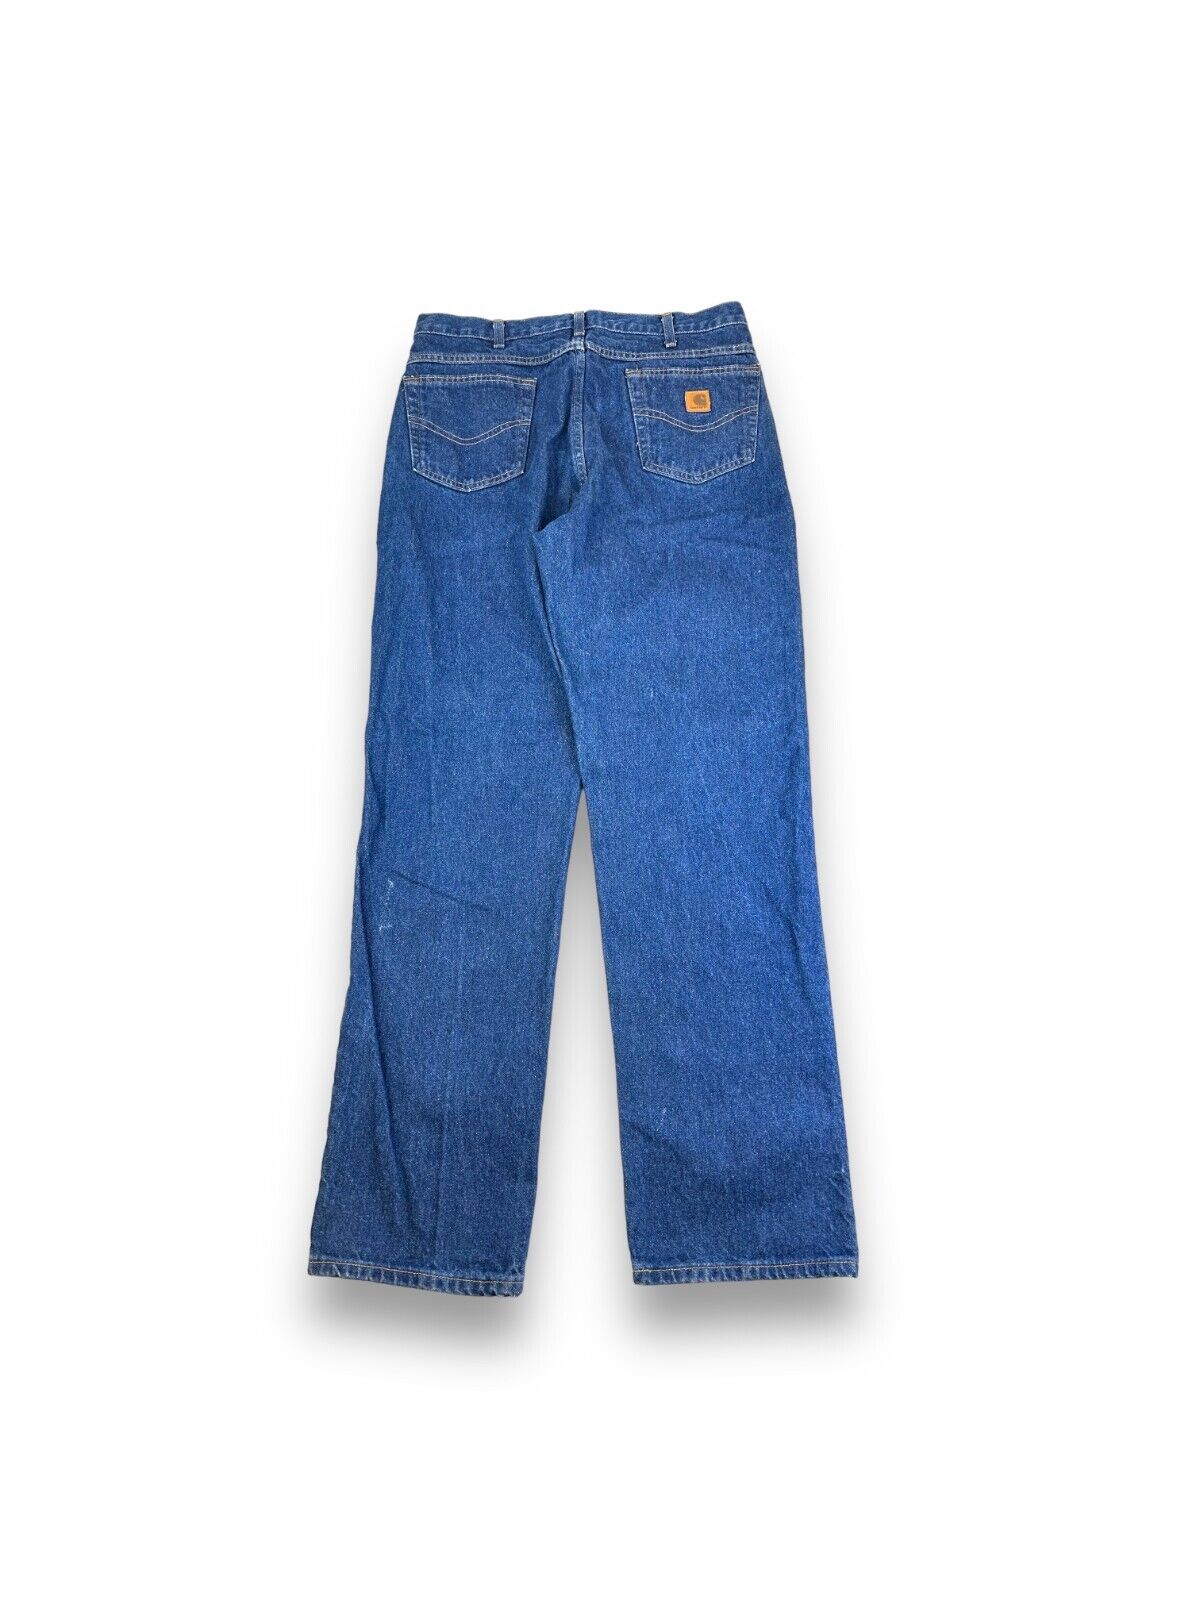 Vintage Carhartt Relaxed Fit Dark Wash Denim Workwear Pants Size 36W